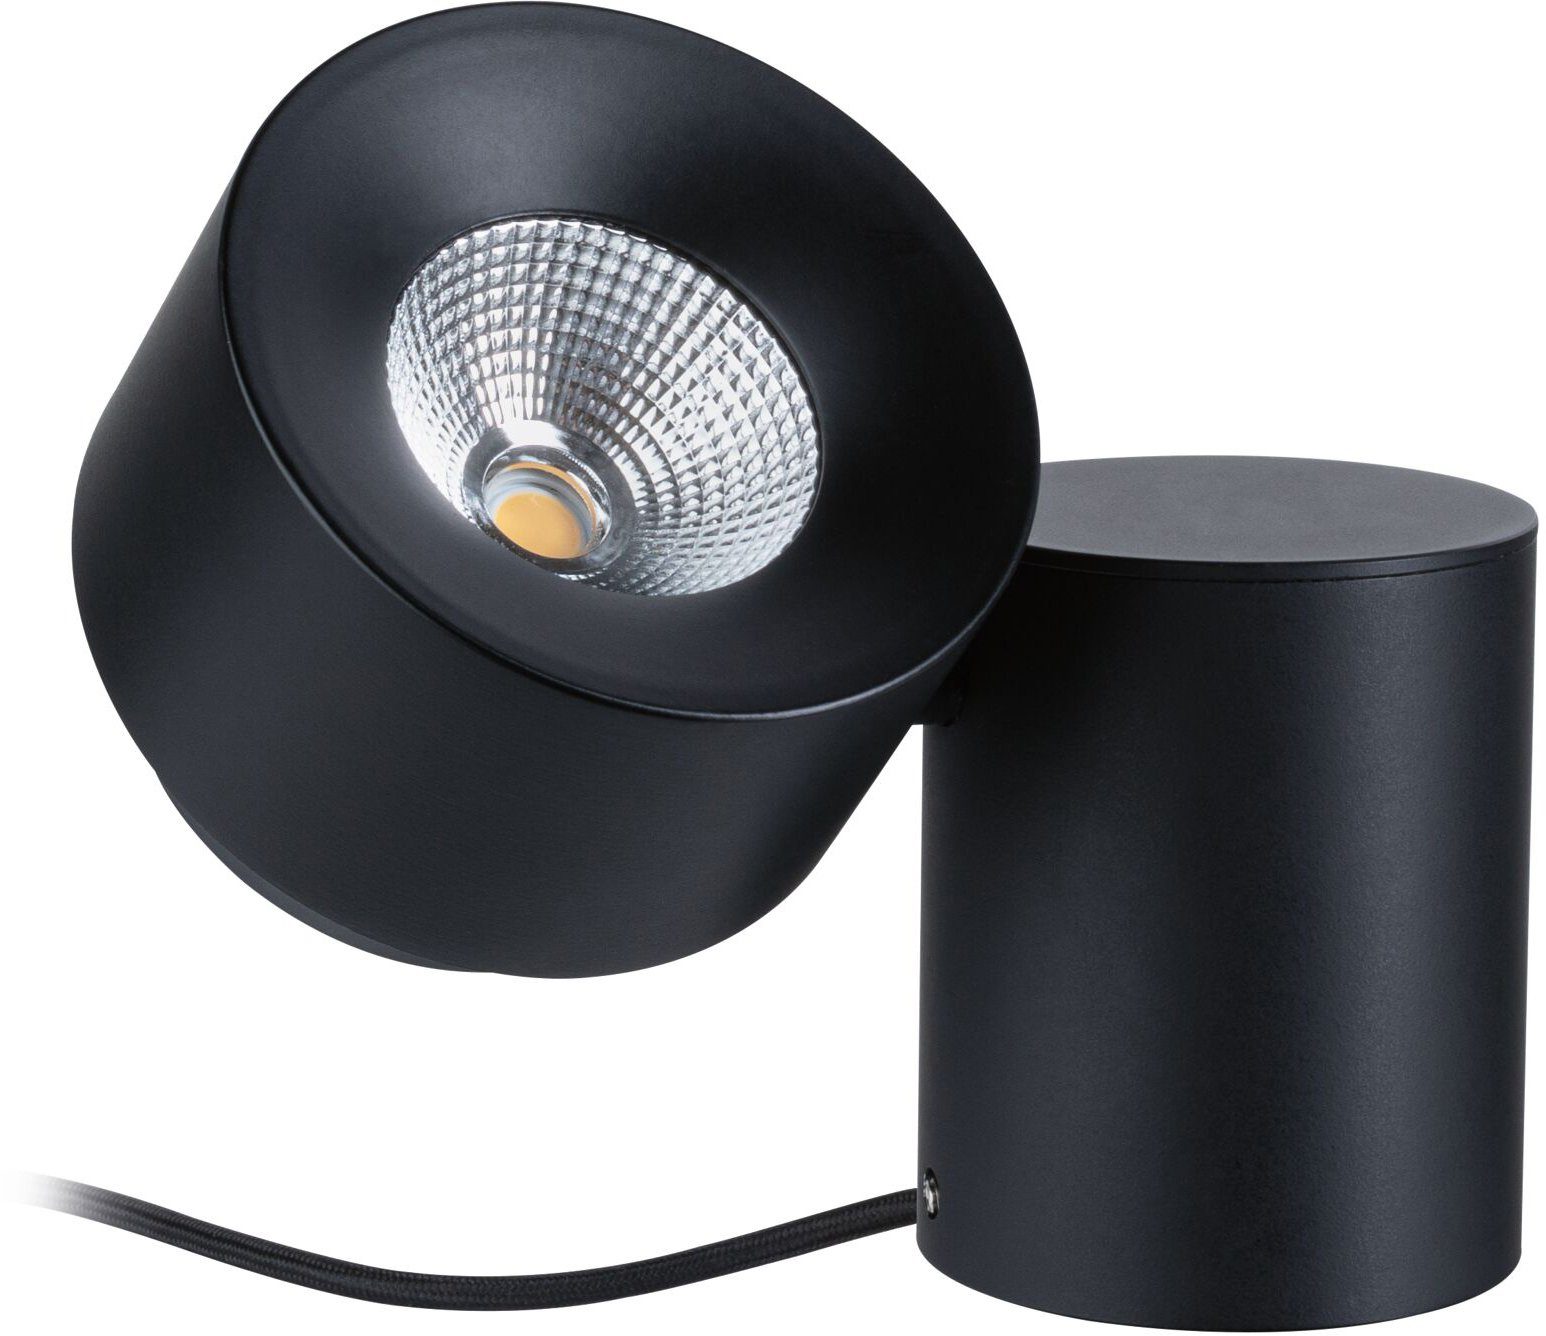 Paulmann integriert, dimmbar, Warmweiß, LED Puric Pane, Schwarz/Grau, Tischleuchte Metall fest LED,